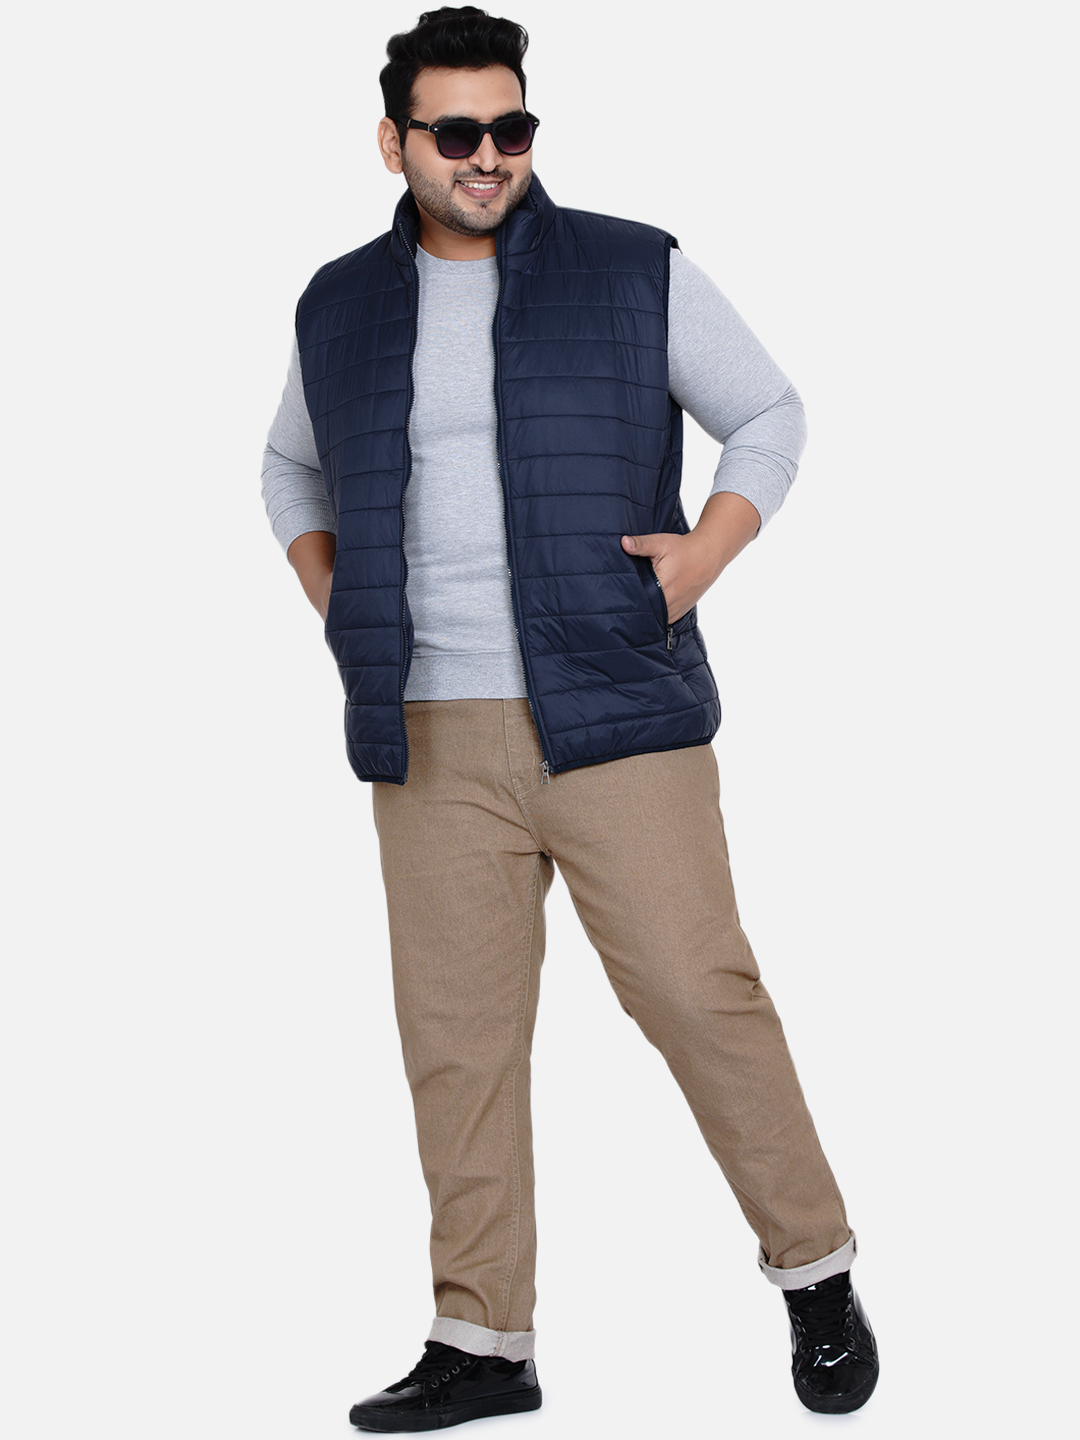 winterwear/jackets/JPJKT73012B/jpjkt73012b-1.jpg